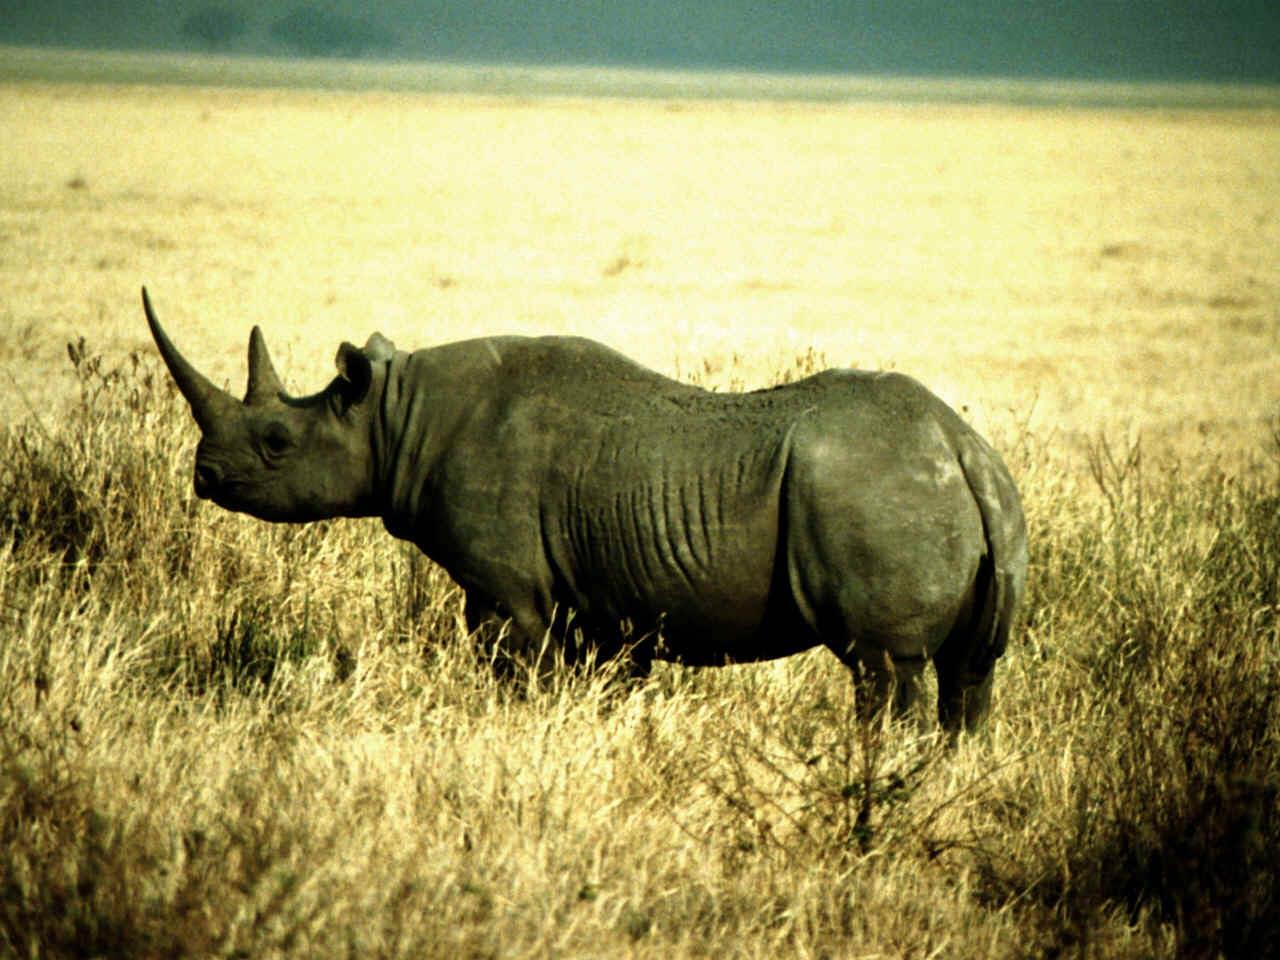 Free Rhinoceros Wallpapers download